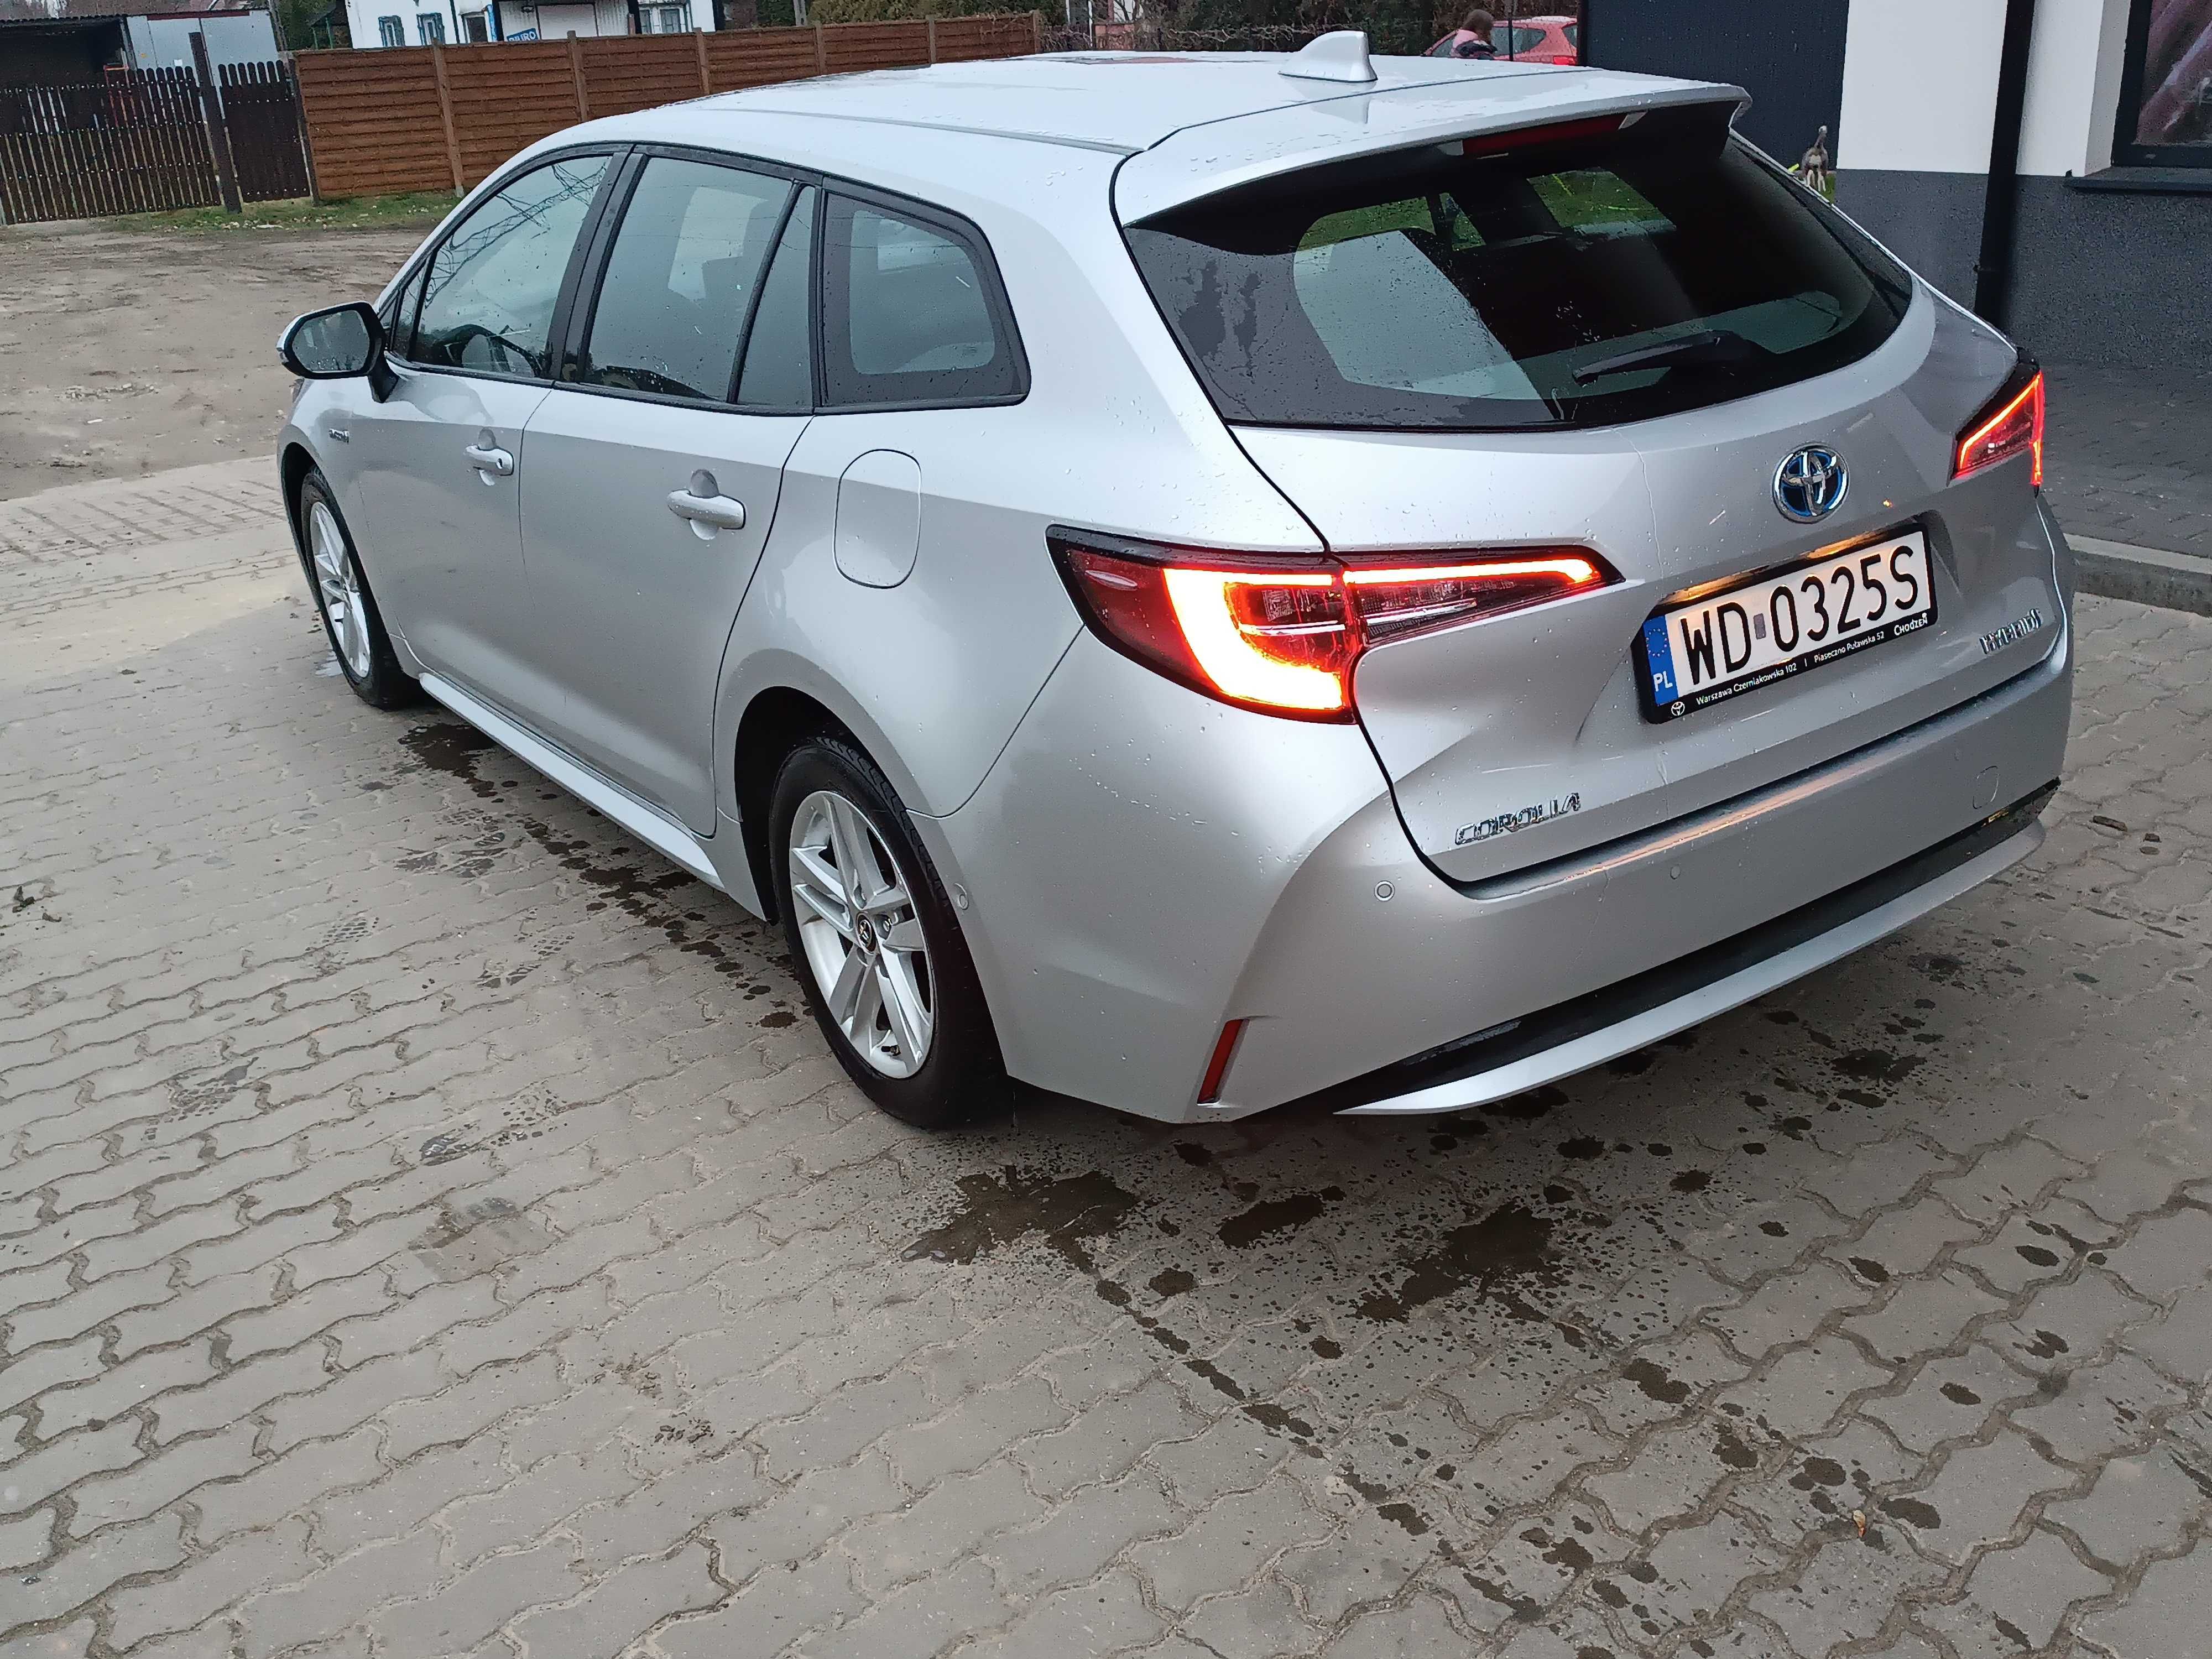 Toyota Corolla 1.8Hybrid Comfort 2021r Salon Polska 16 tys km Warszawa Bemowo • OLX.pl